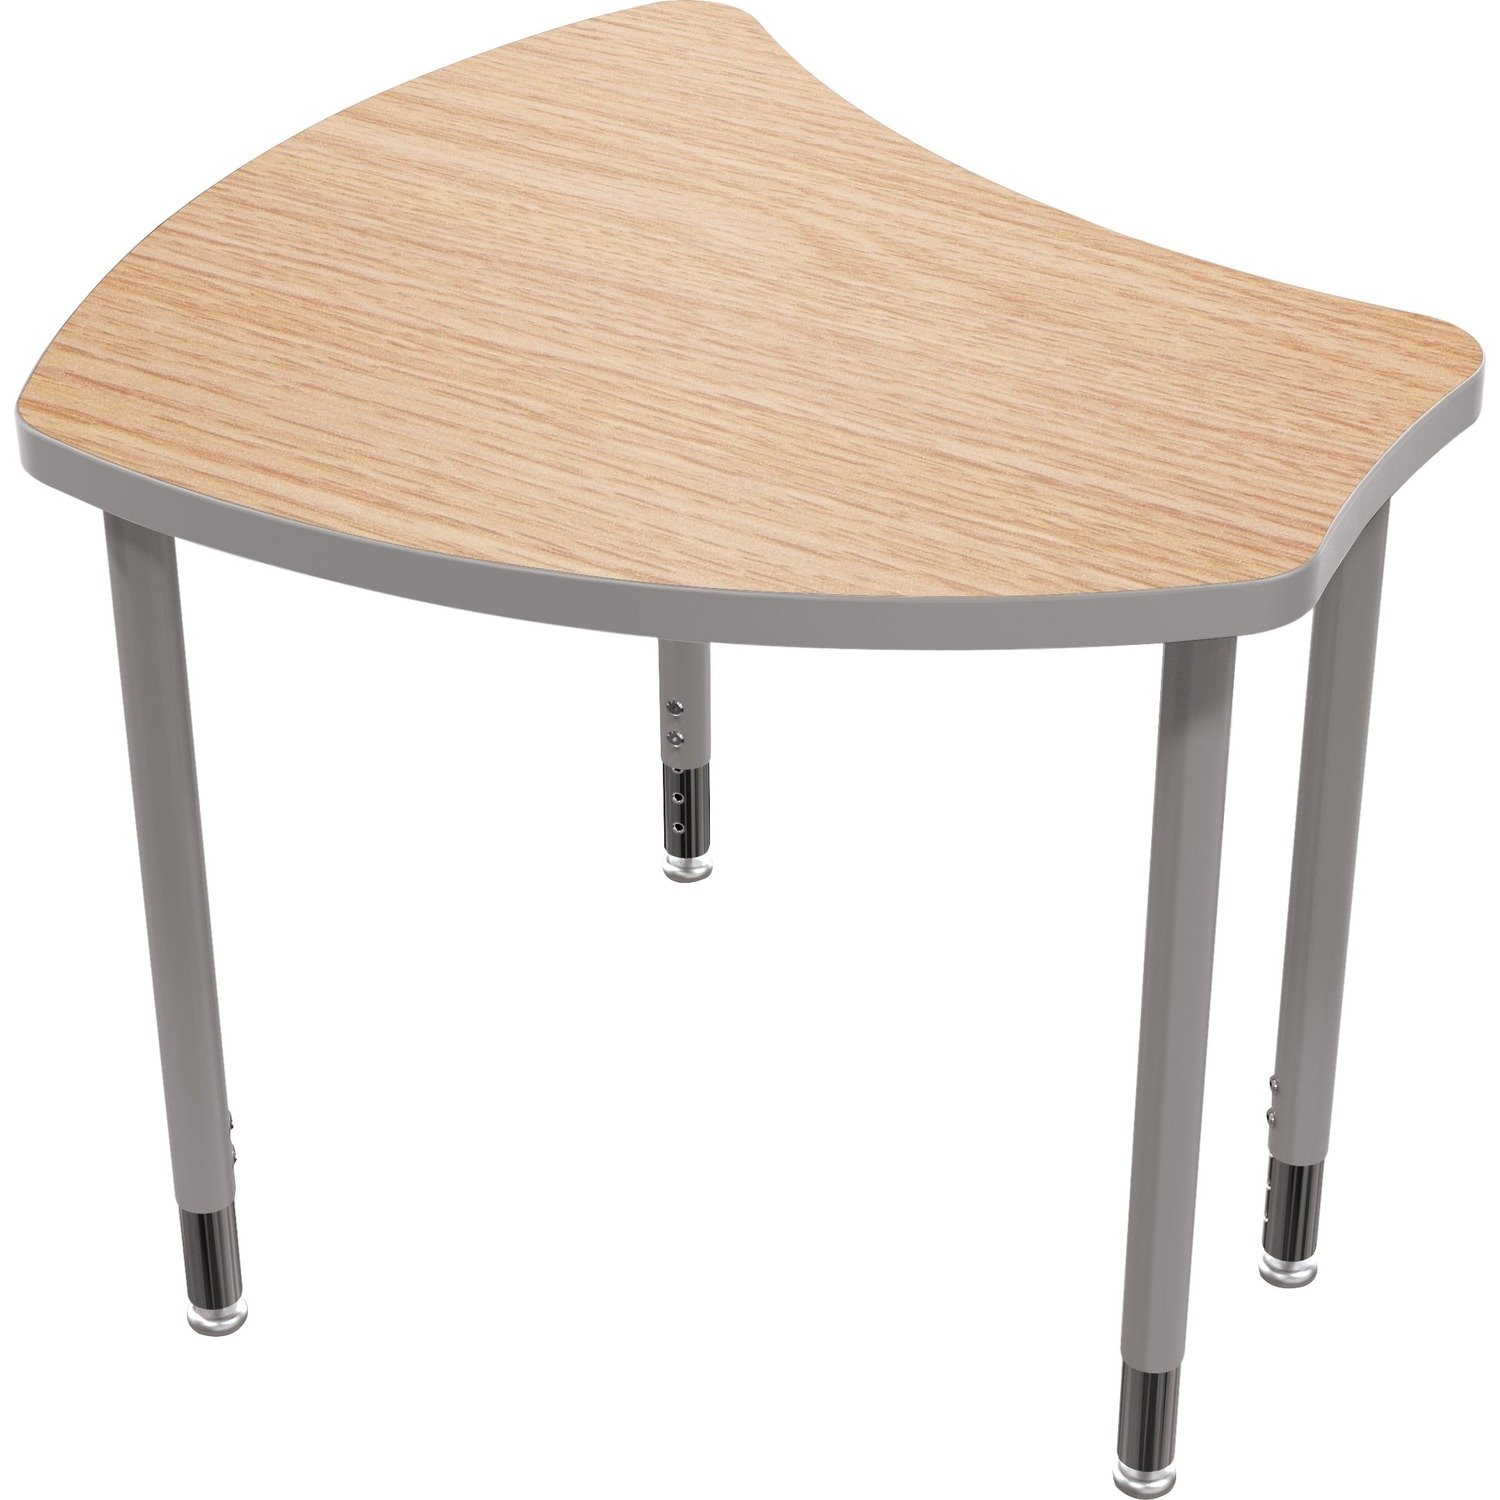 Balt Shapes Desk - Small